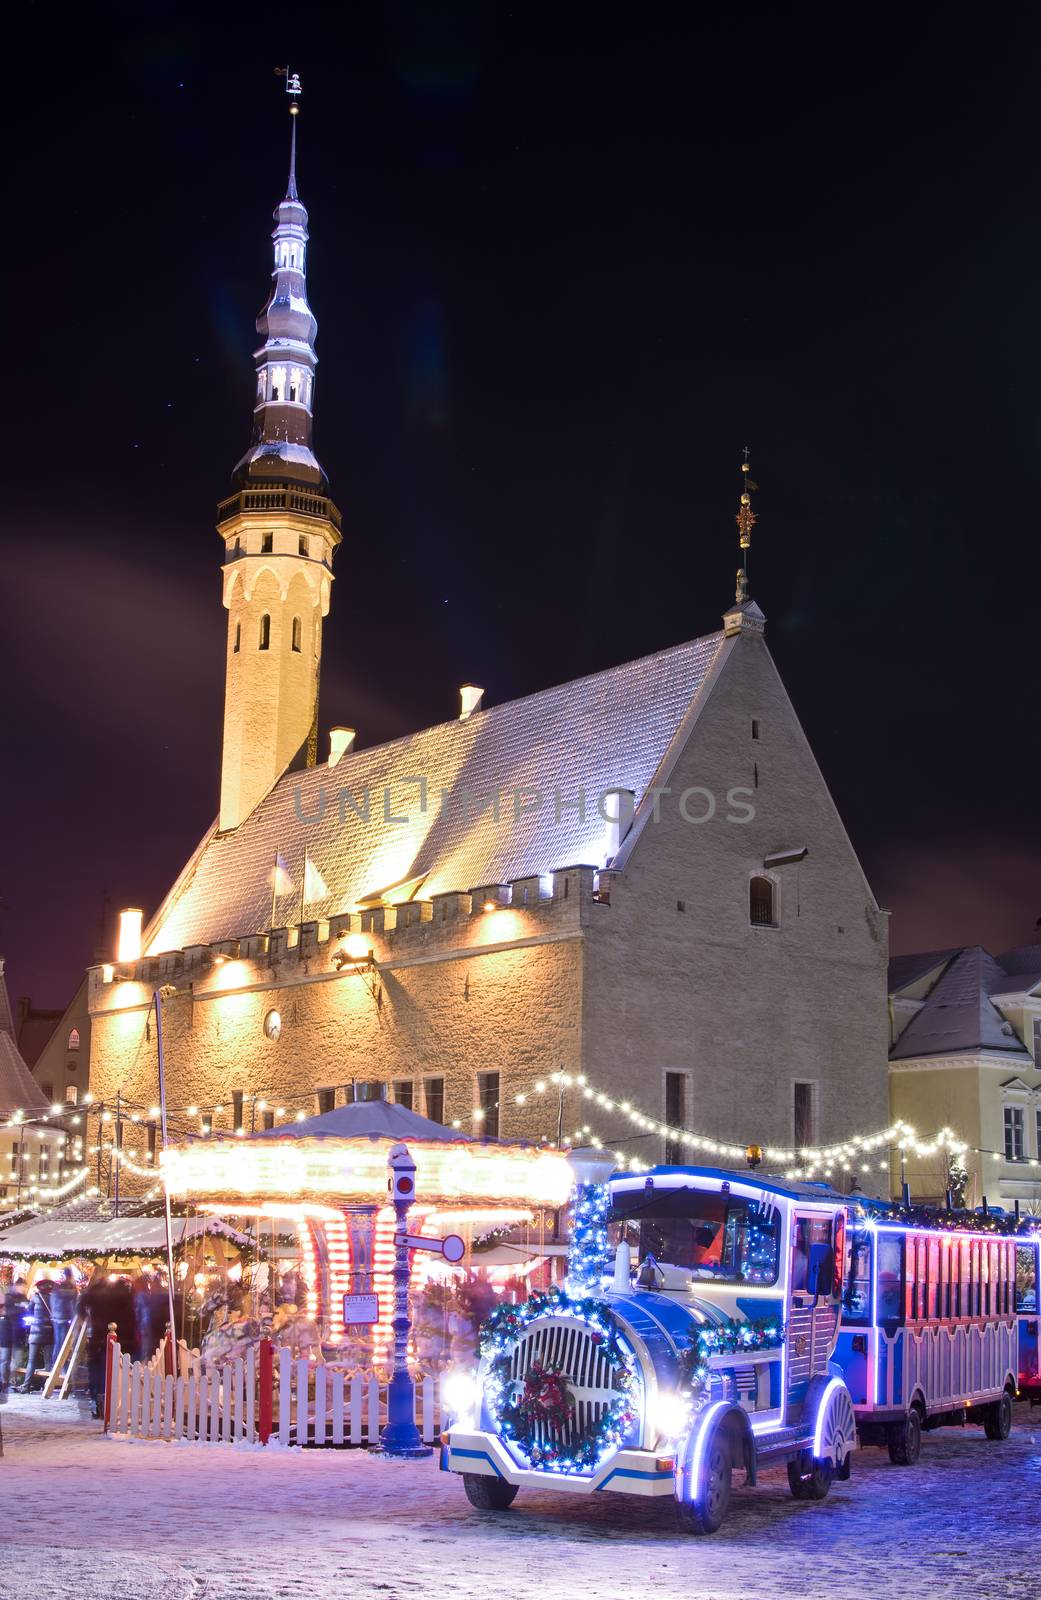 Christmas market and christmas train near city hall in old city of Tallinn, Estonia